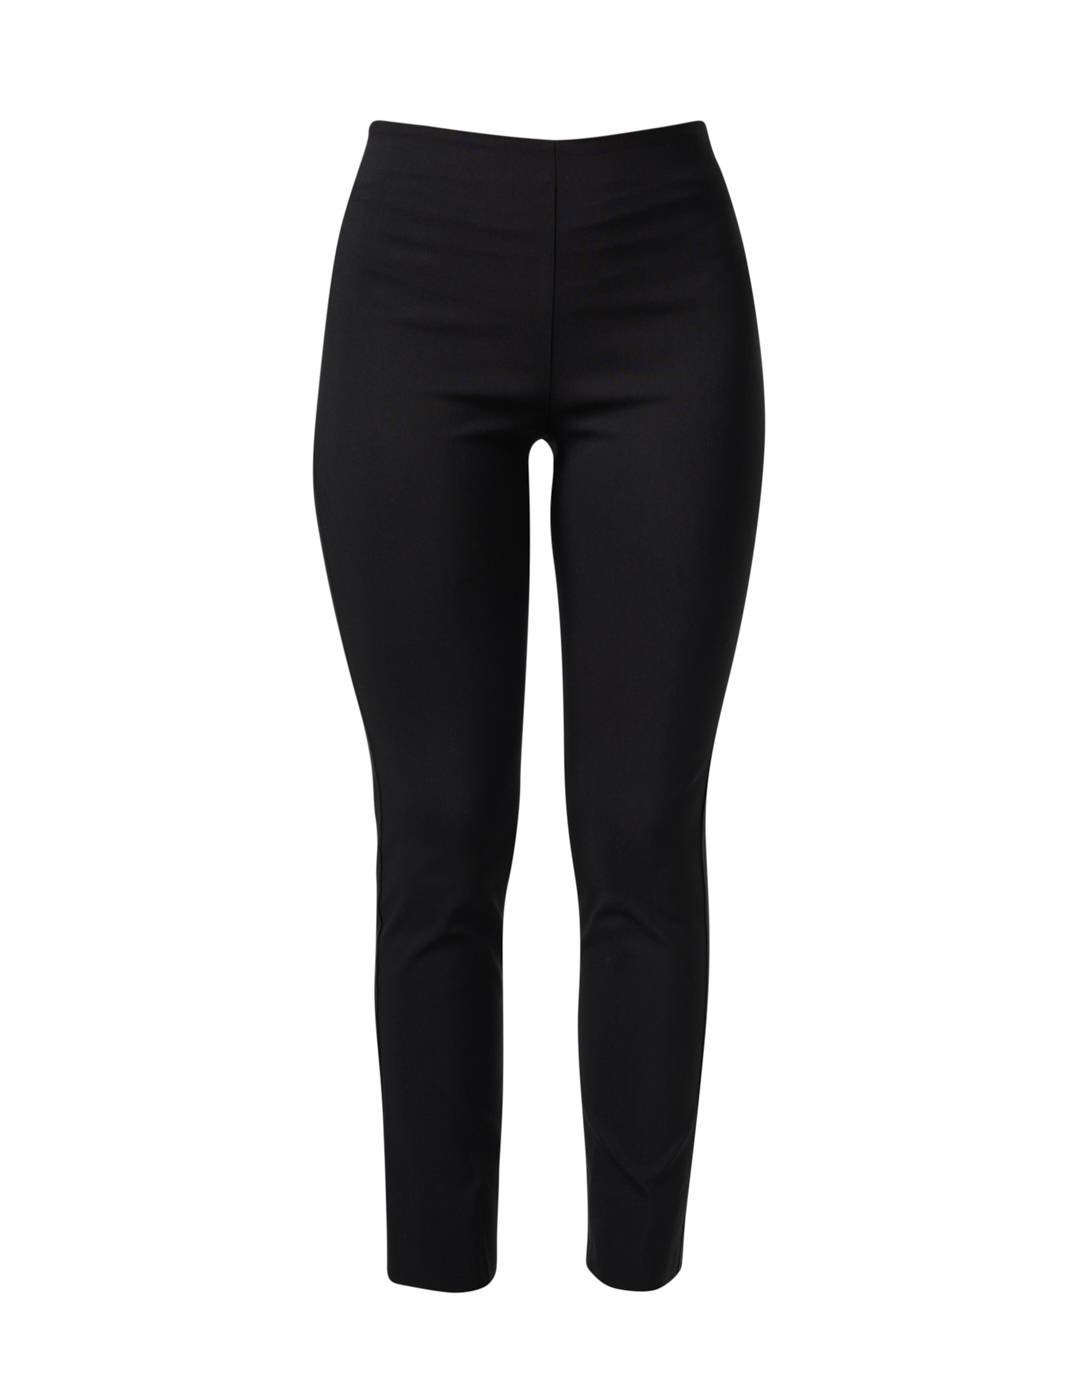 Women's Stretchy Black Pants - Elasticated Waist